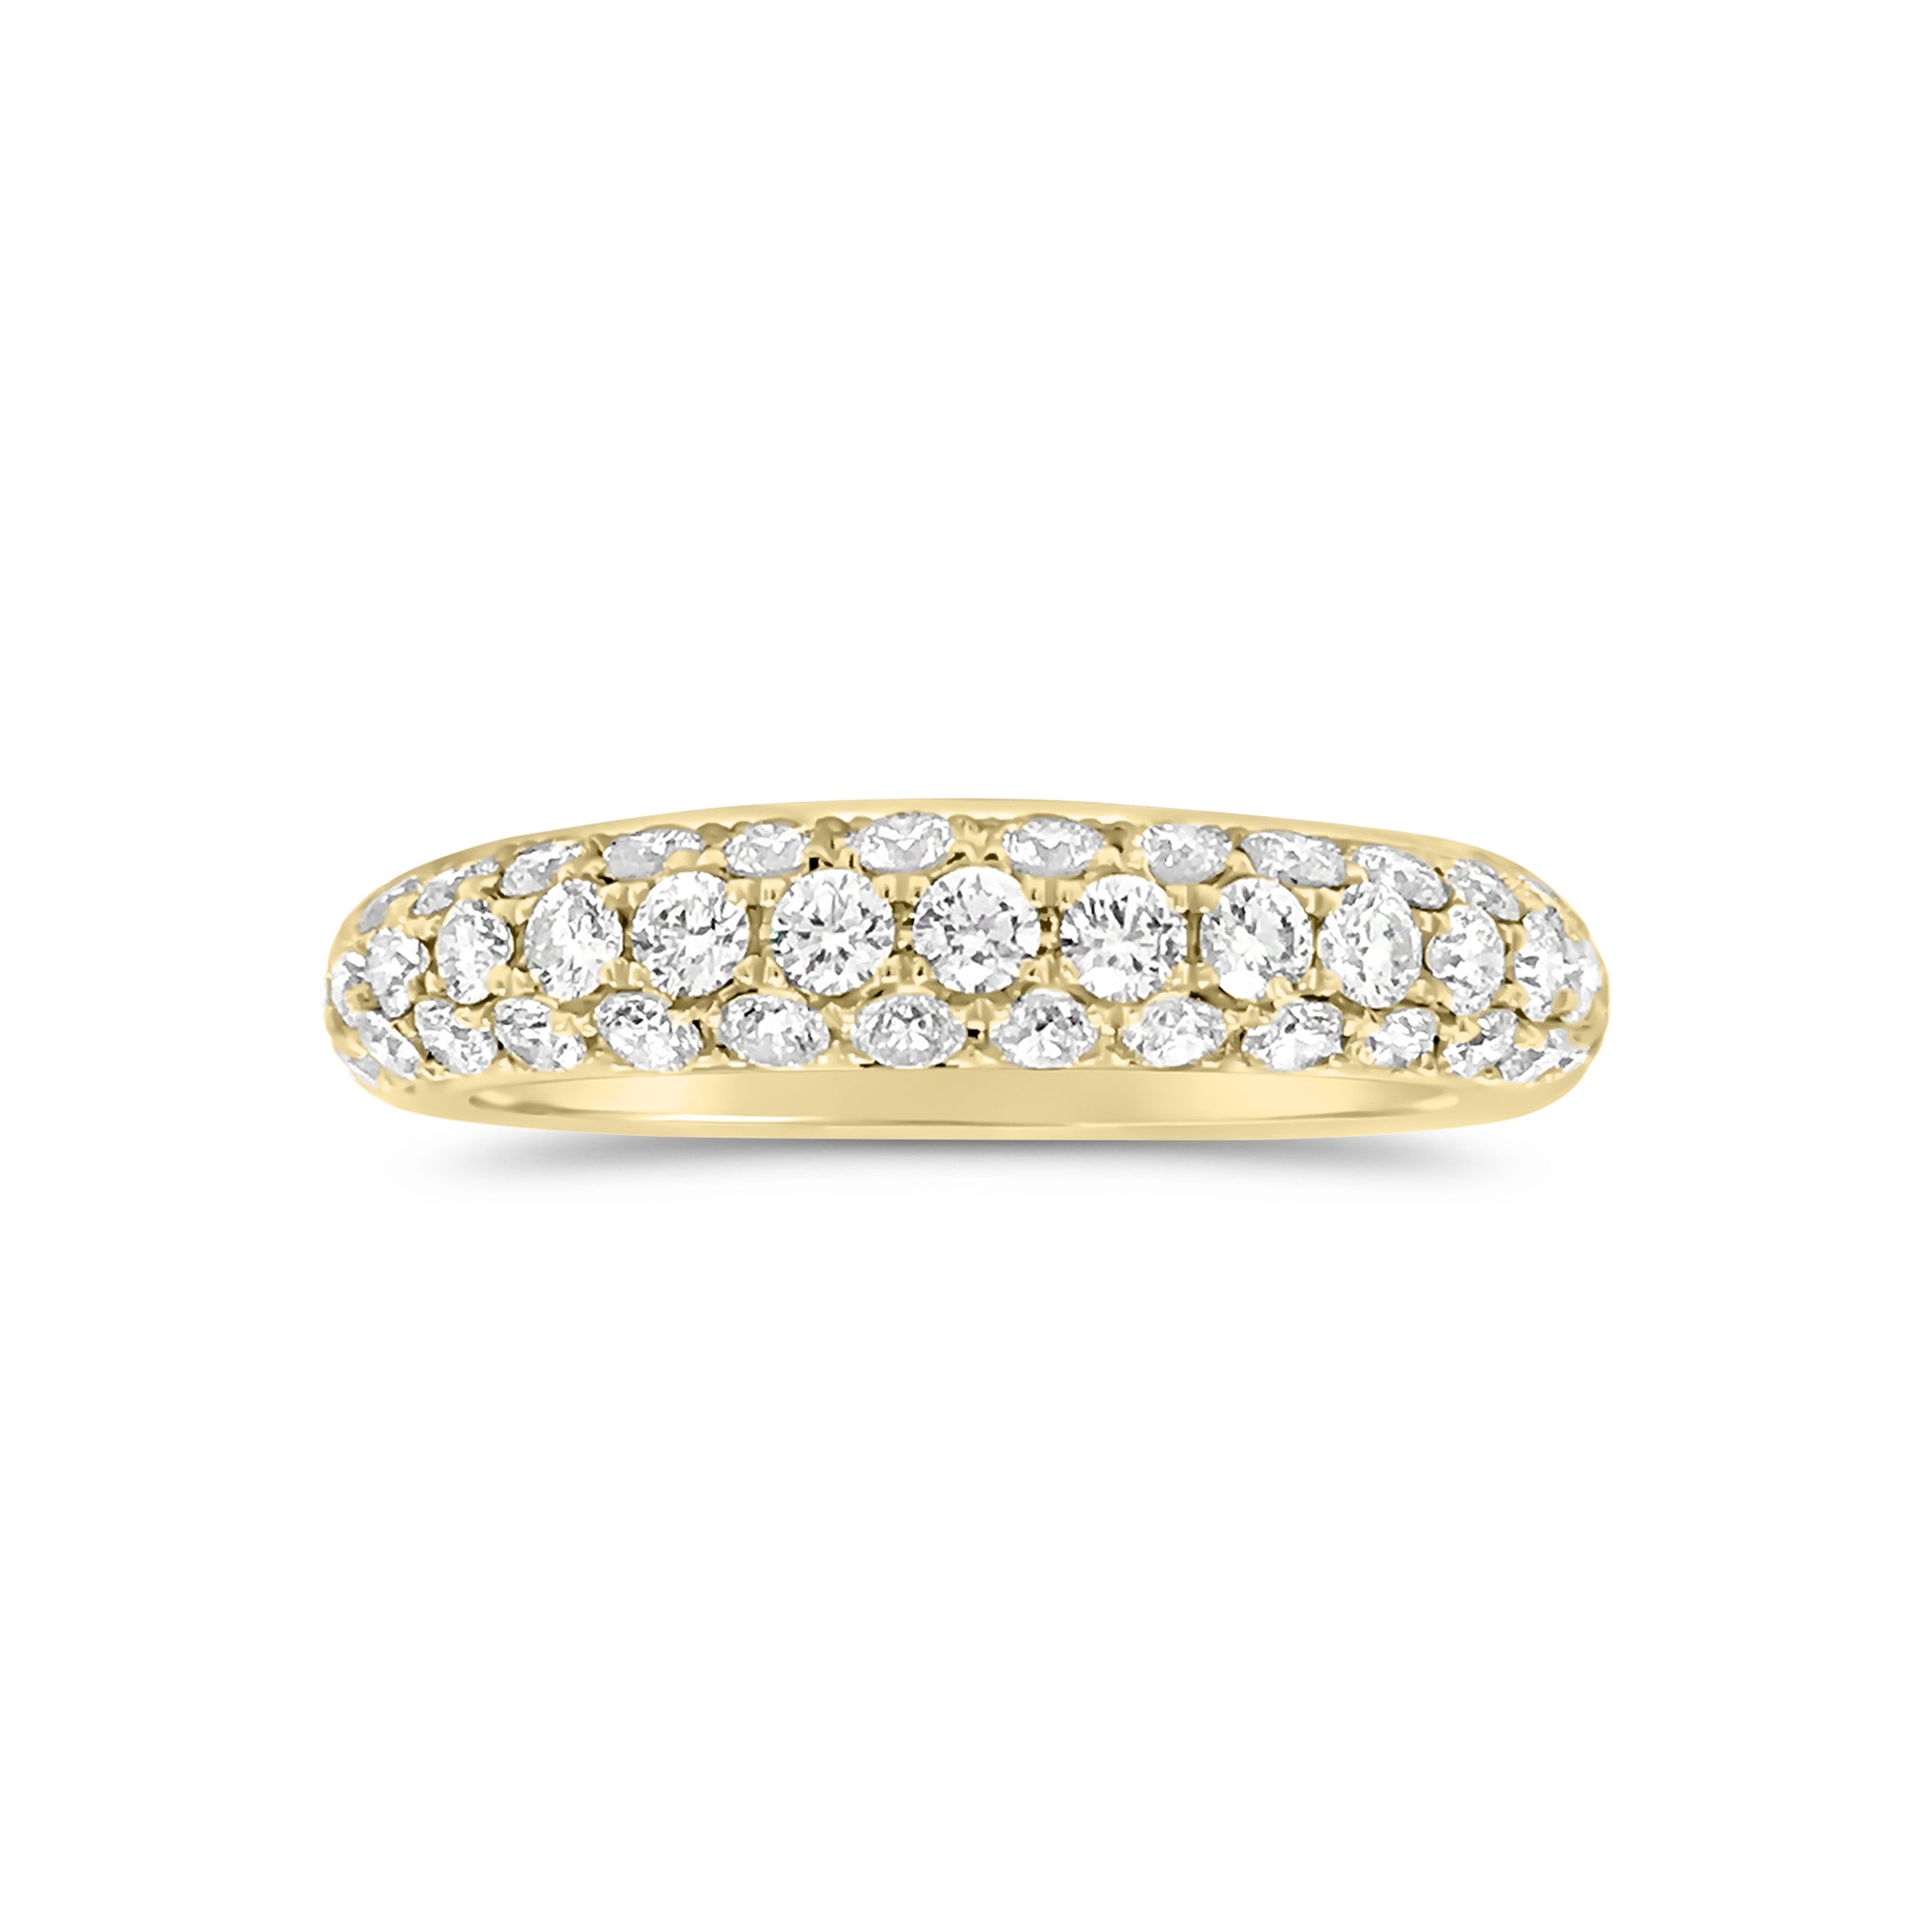 Triple-row diamond band -18k gold weighing 3.08 grams -43 round four prong-set diamonds weighing .76 carats